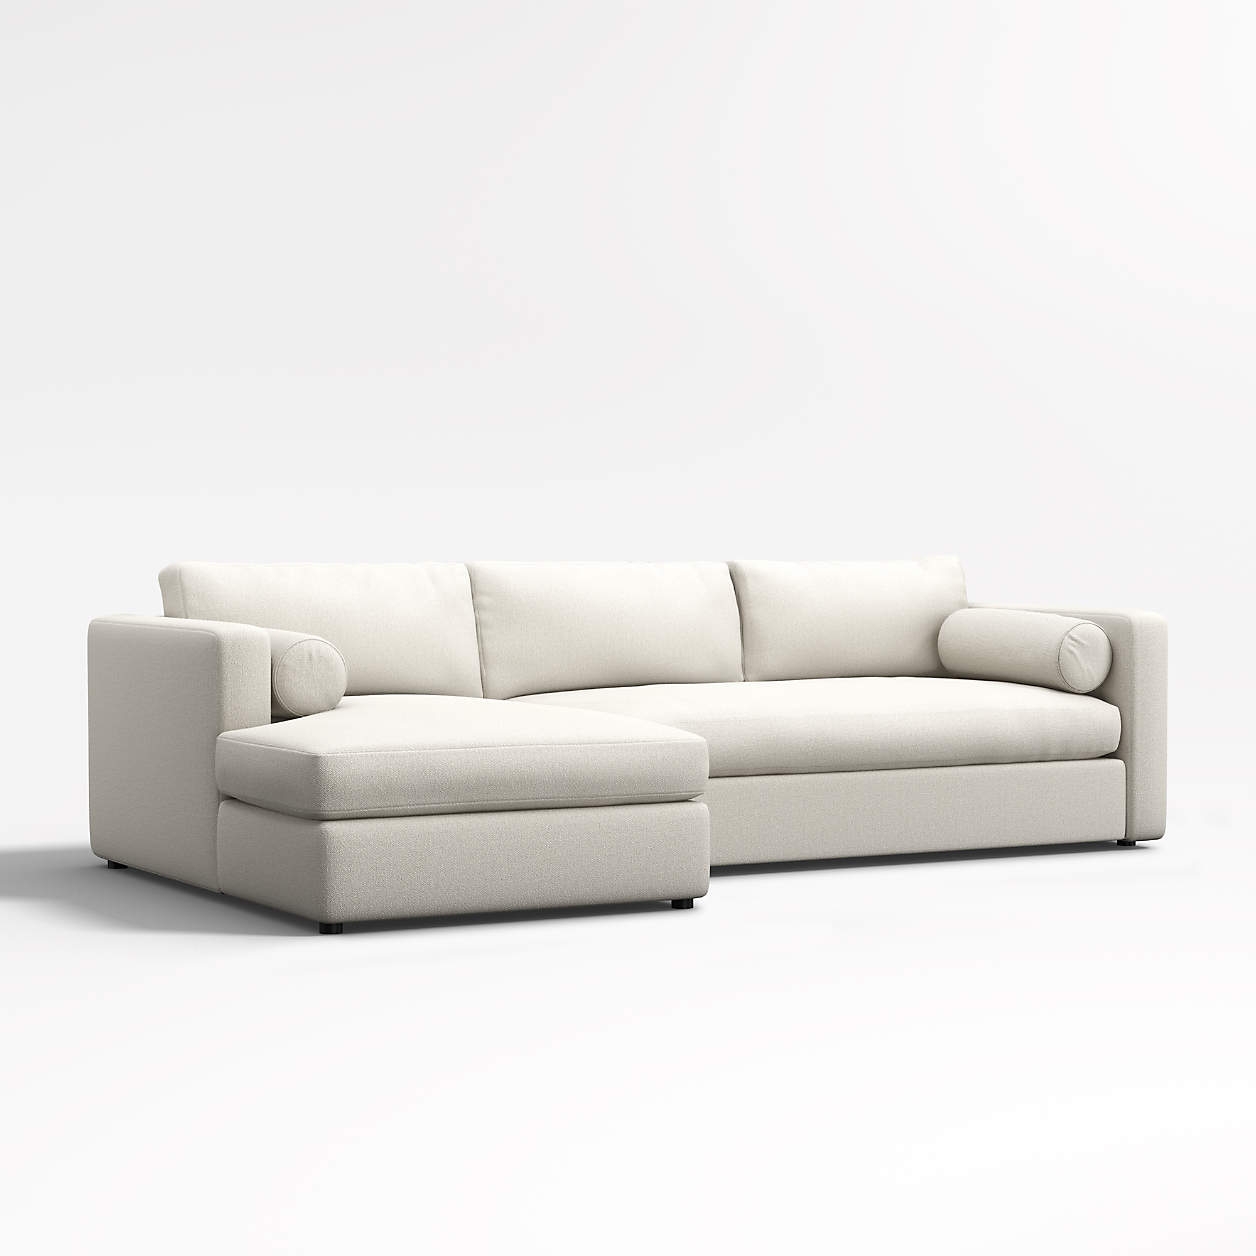 Aris Deep 2-Piece Left-Arm Chaise Sectional Sofa - Image 2